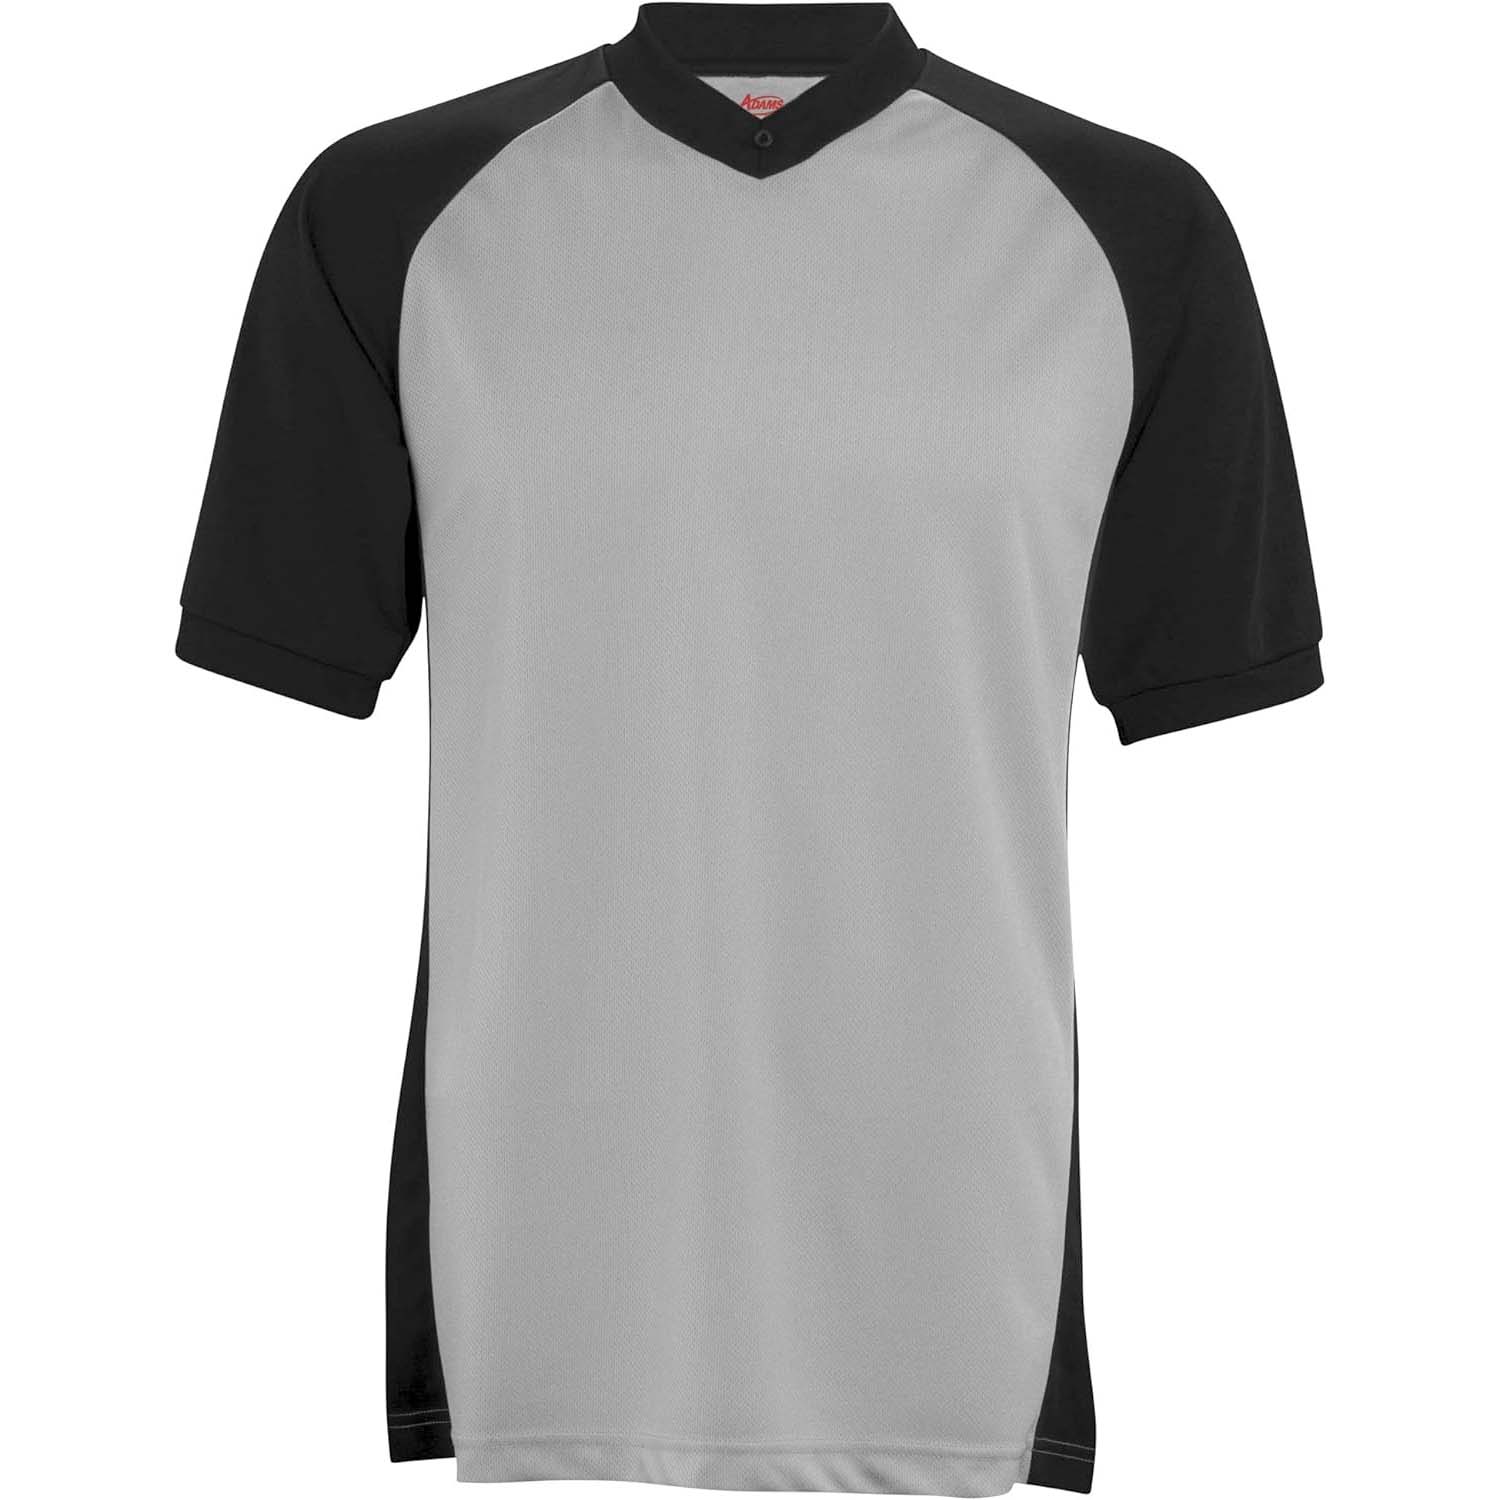 Adams V-Neck Short Sleeve Referee Shirt (Grey) with Black Raglan Sleeves